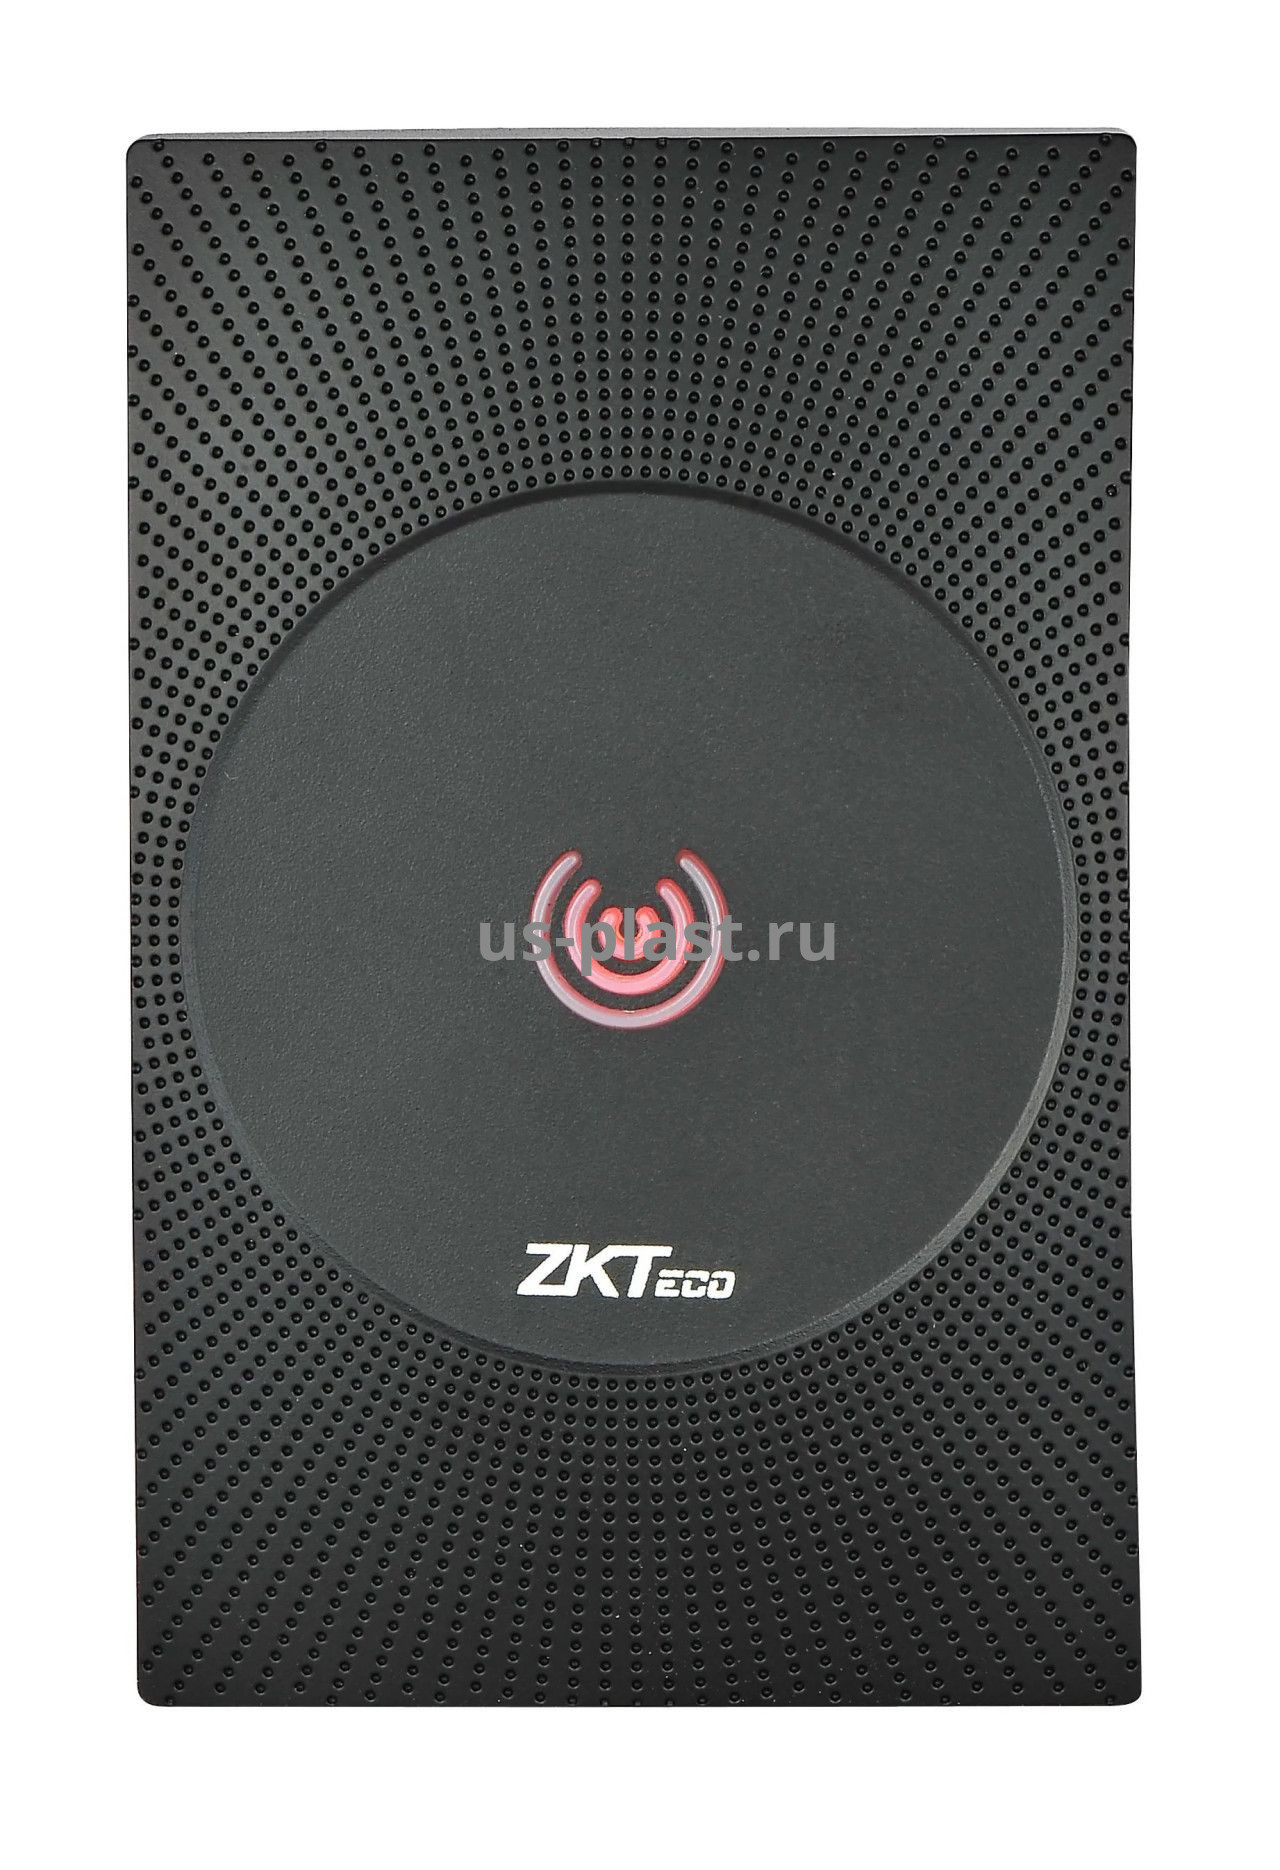 ZKTeco KR600M, считыватель RFID карт Mifare